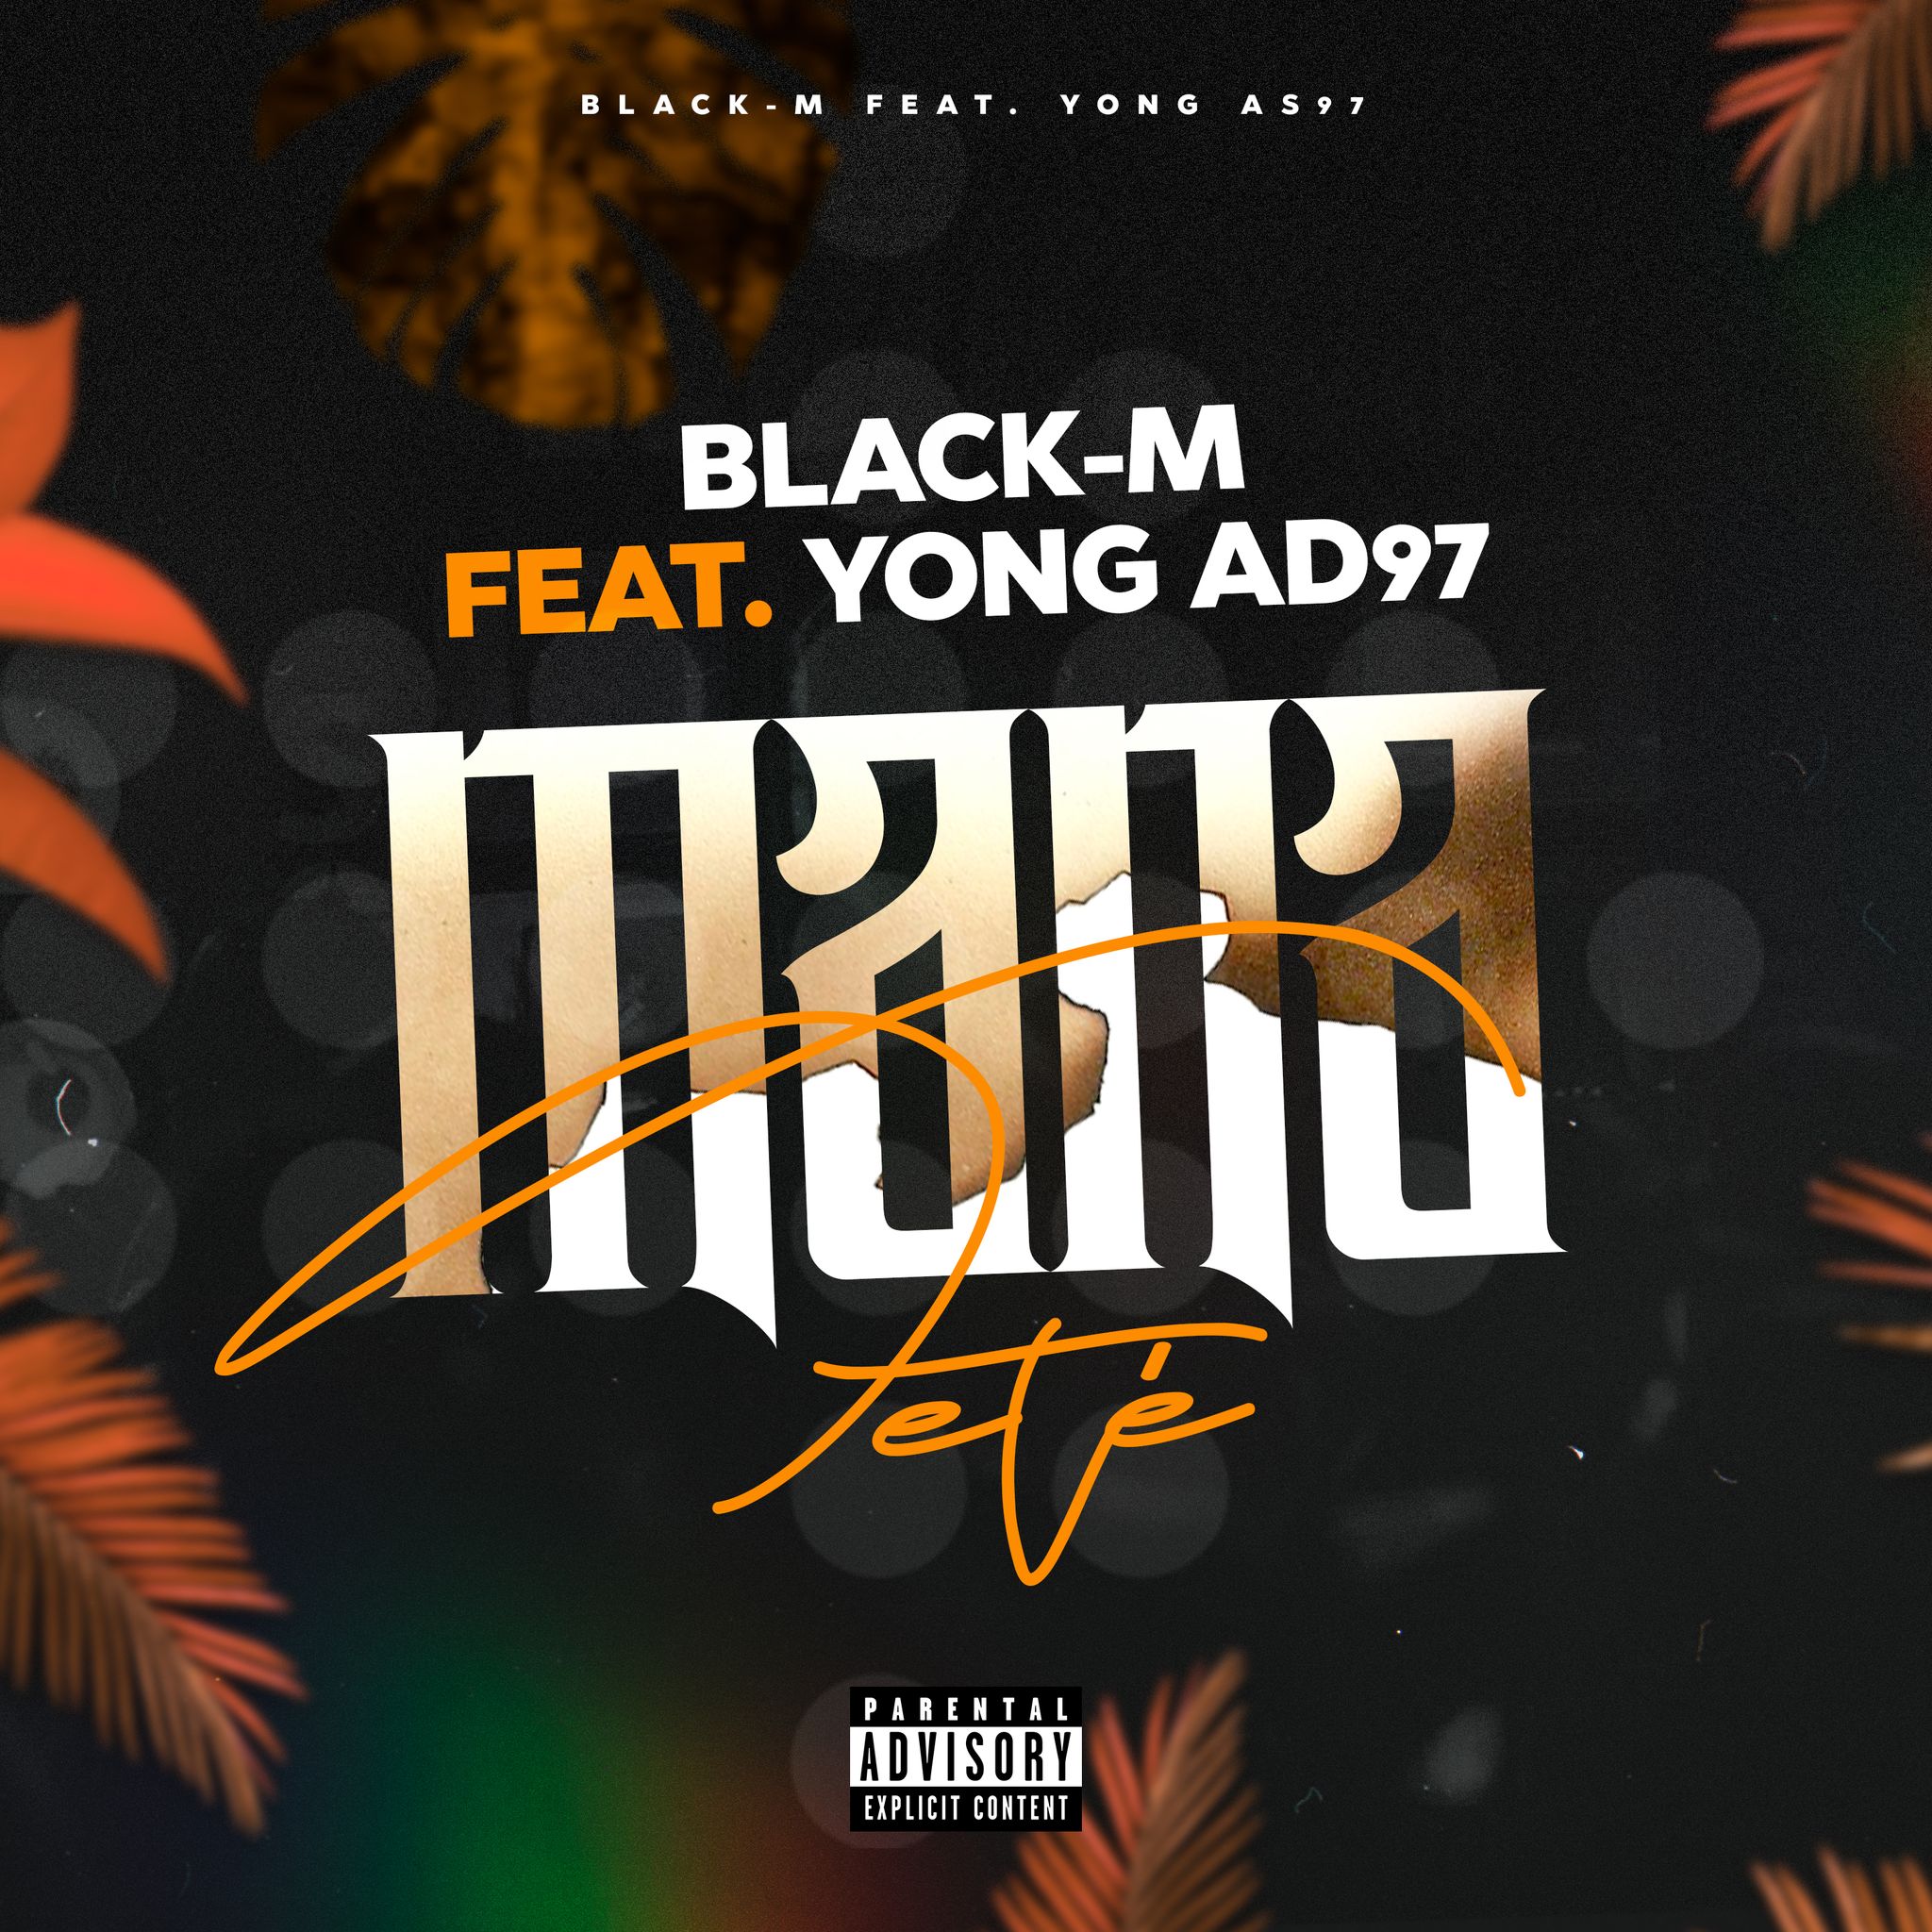 Black-M Feat. Yong Ad97 - Mana Teté